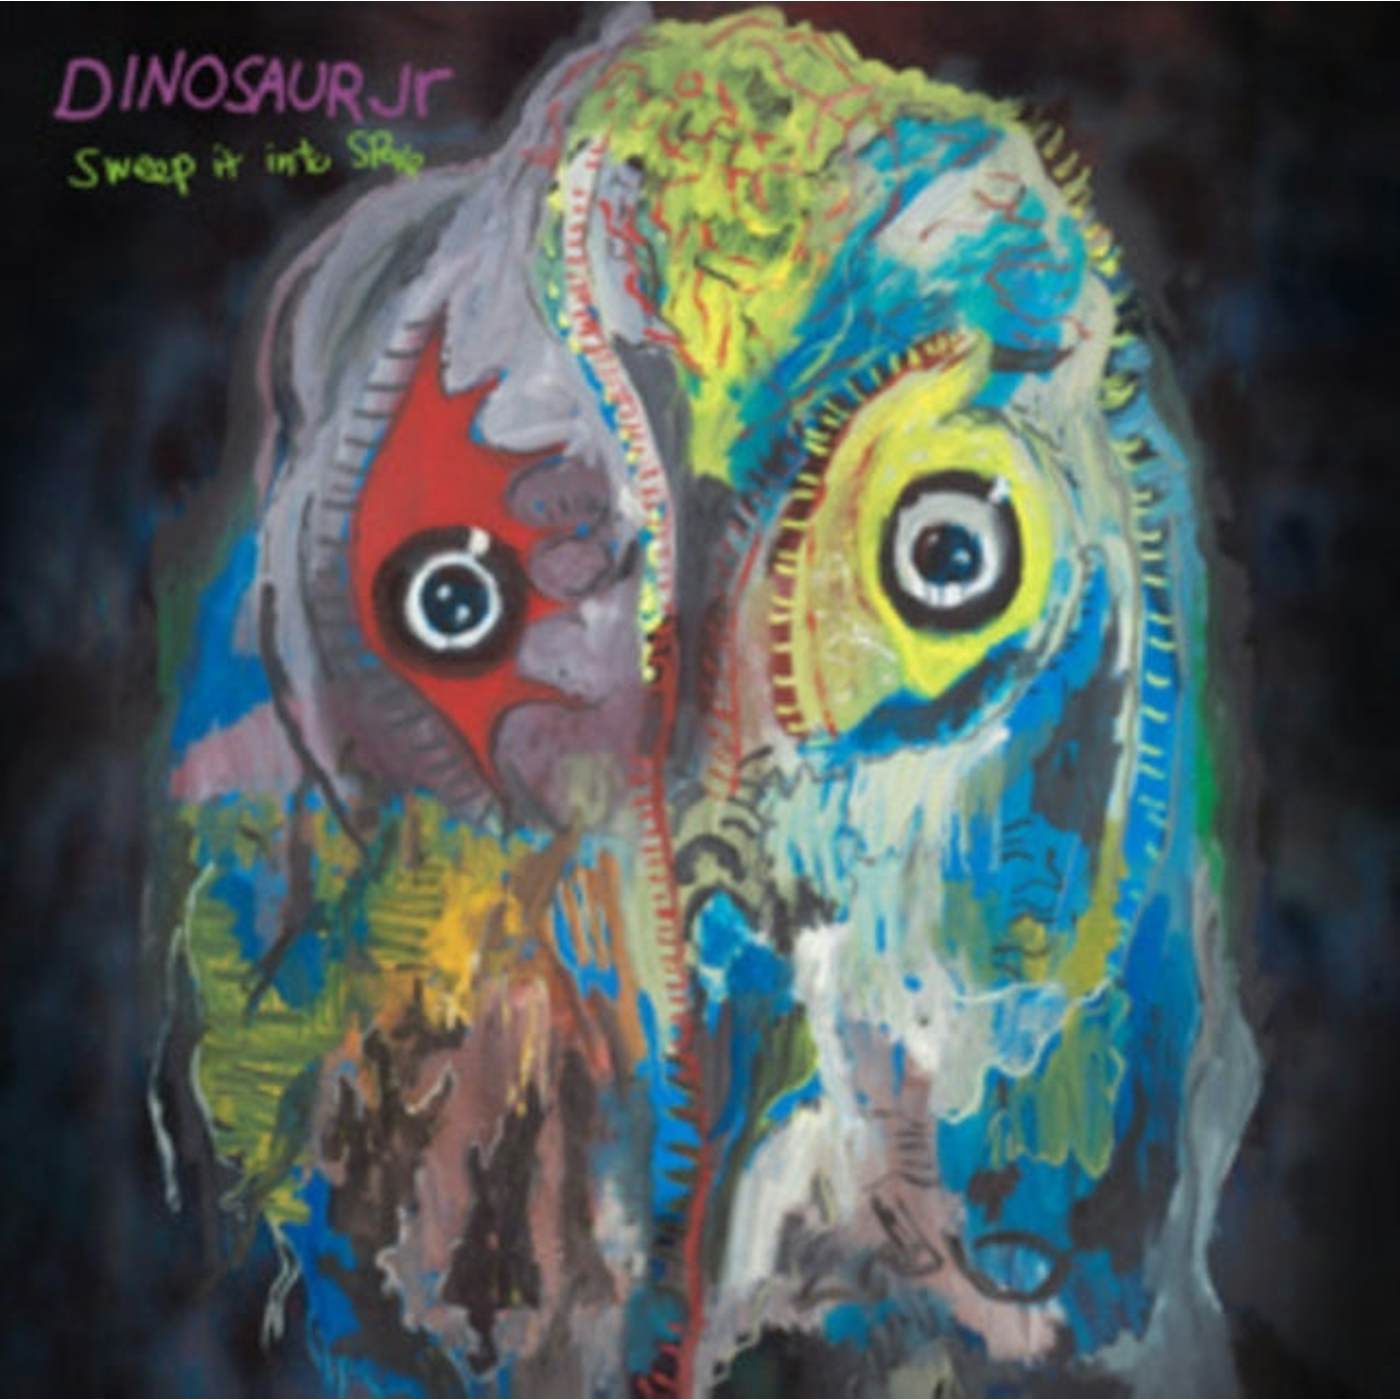 Dinosaur Jr. LP Vinyl Record - Sweep It Into Space